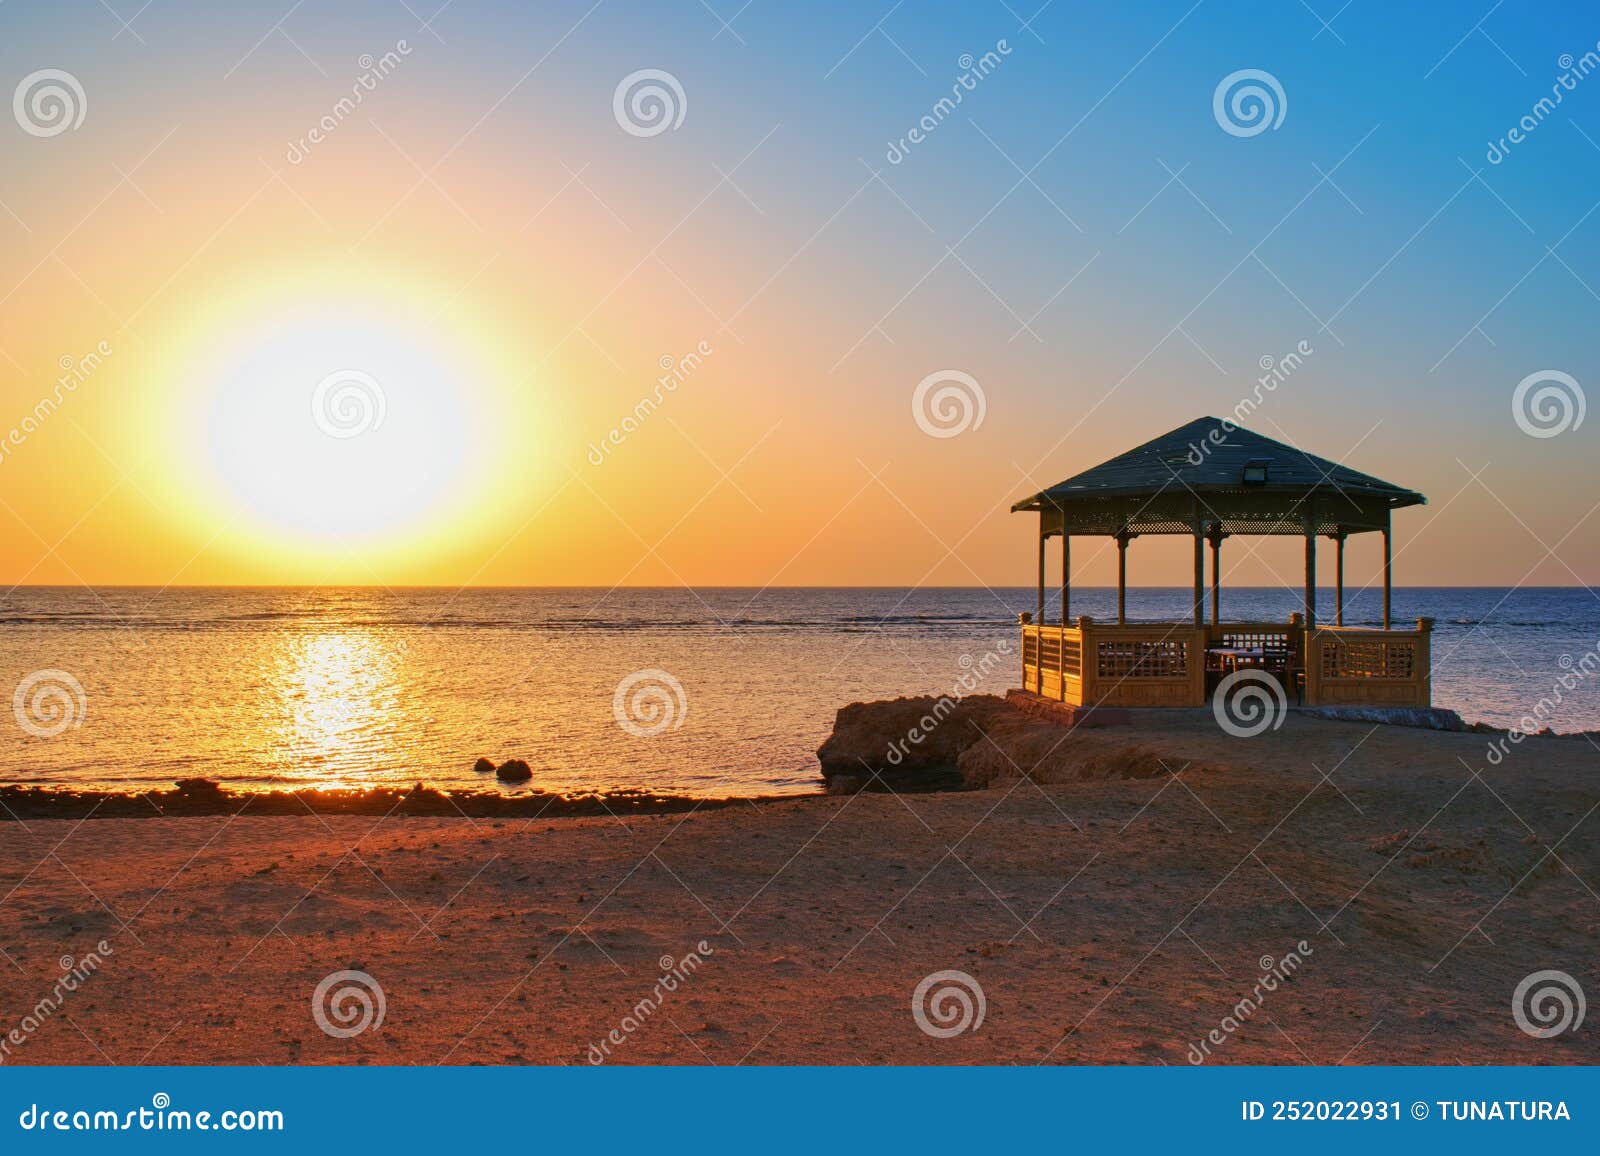 idylic beach with gazebo within sunrise,  marsa alam , red sea, egypt